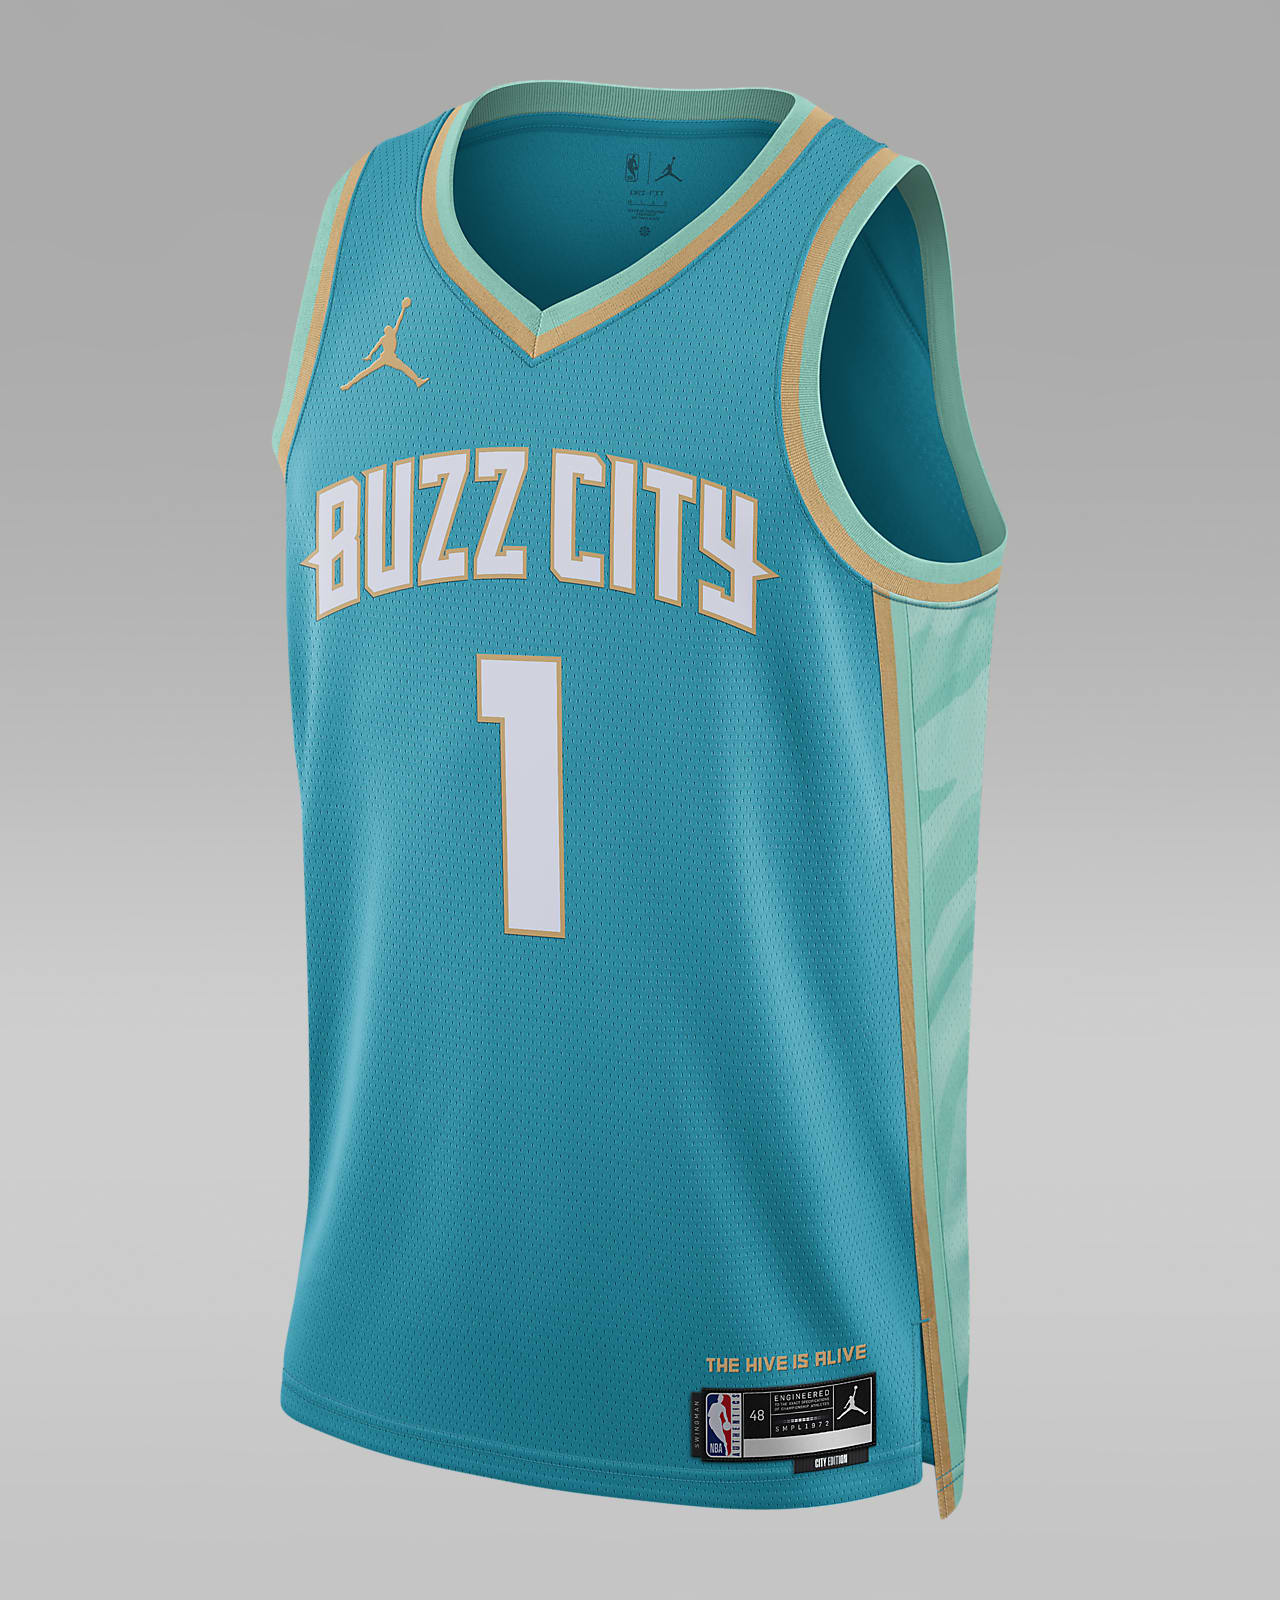 Charlotte Hornets unveil City Edition jerseys